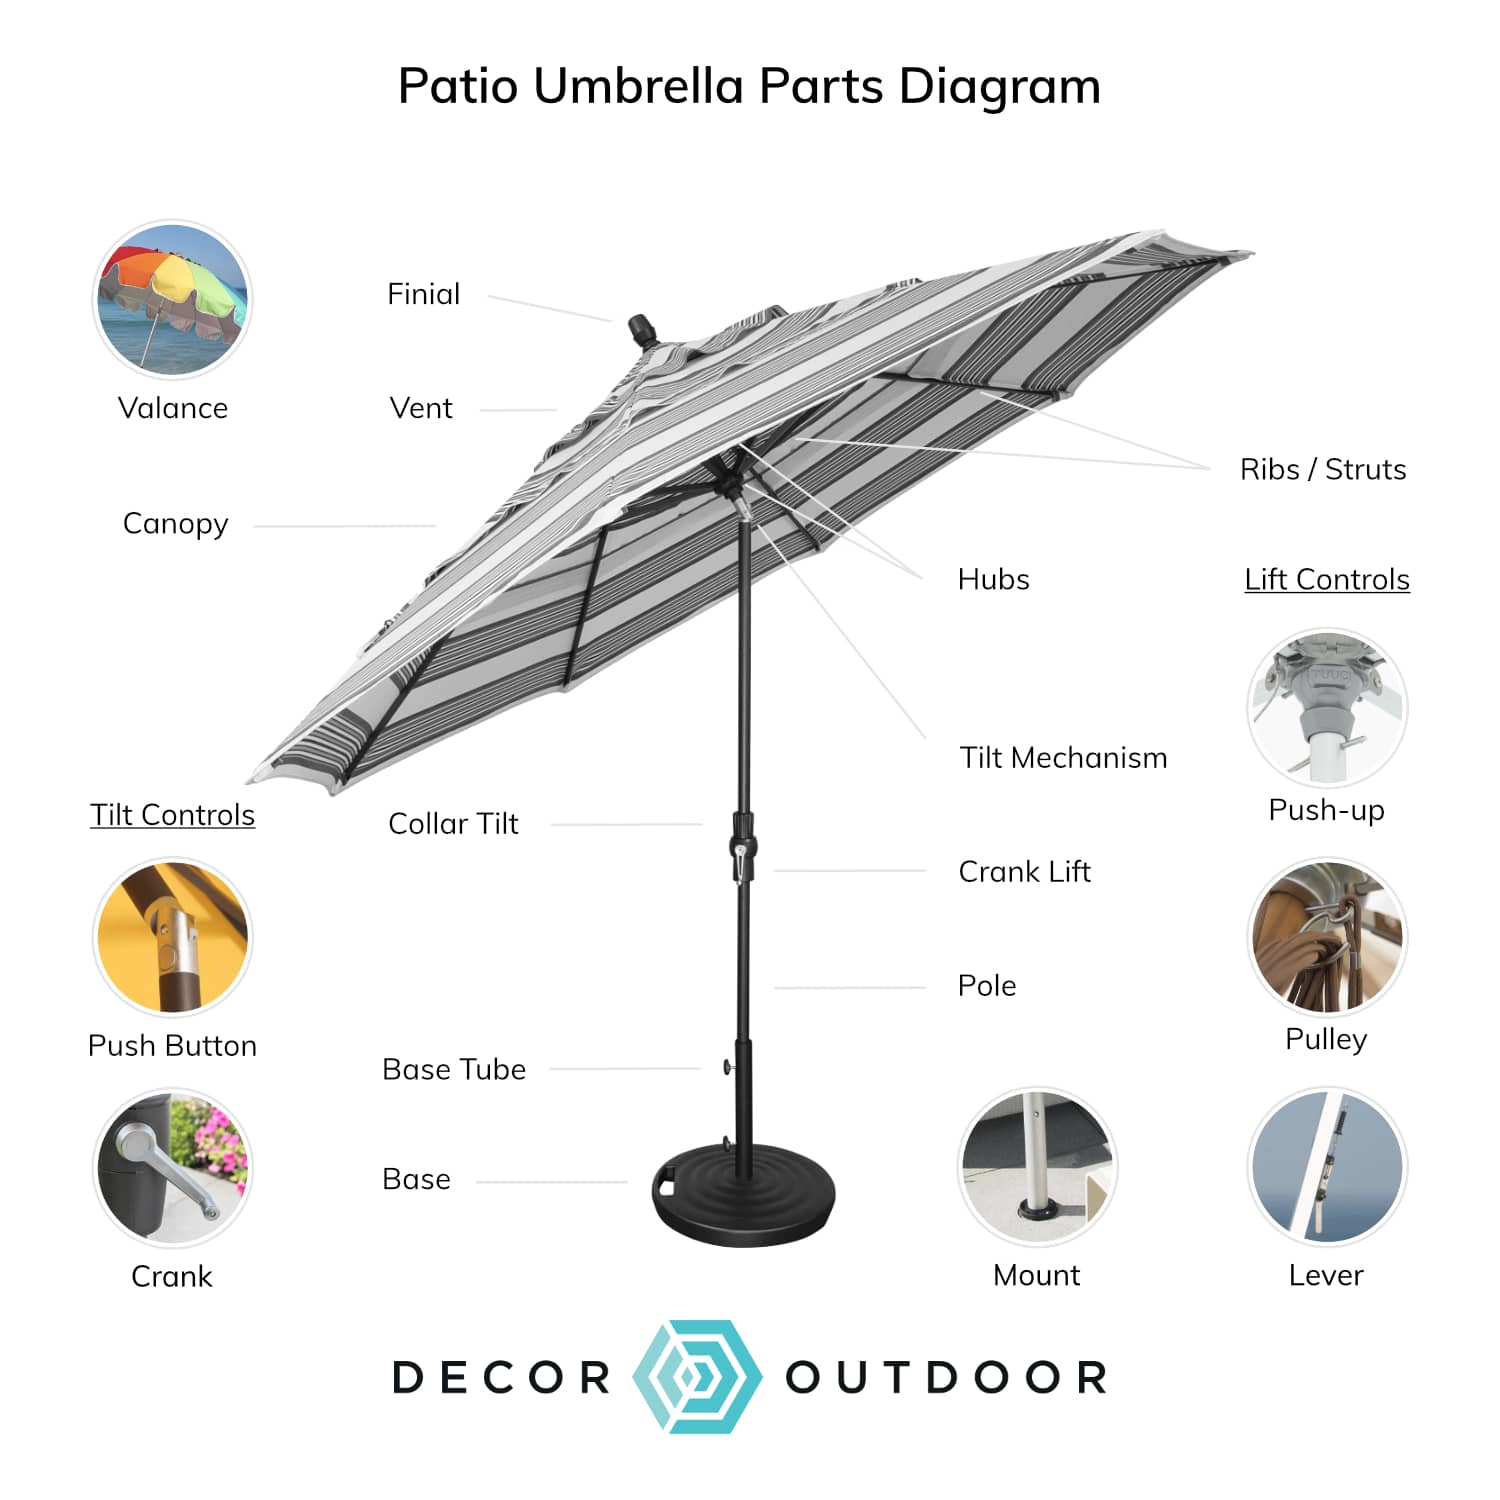 Patio Umbrella Parts Diagram